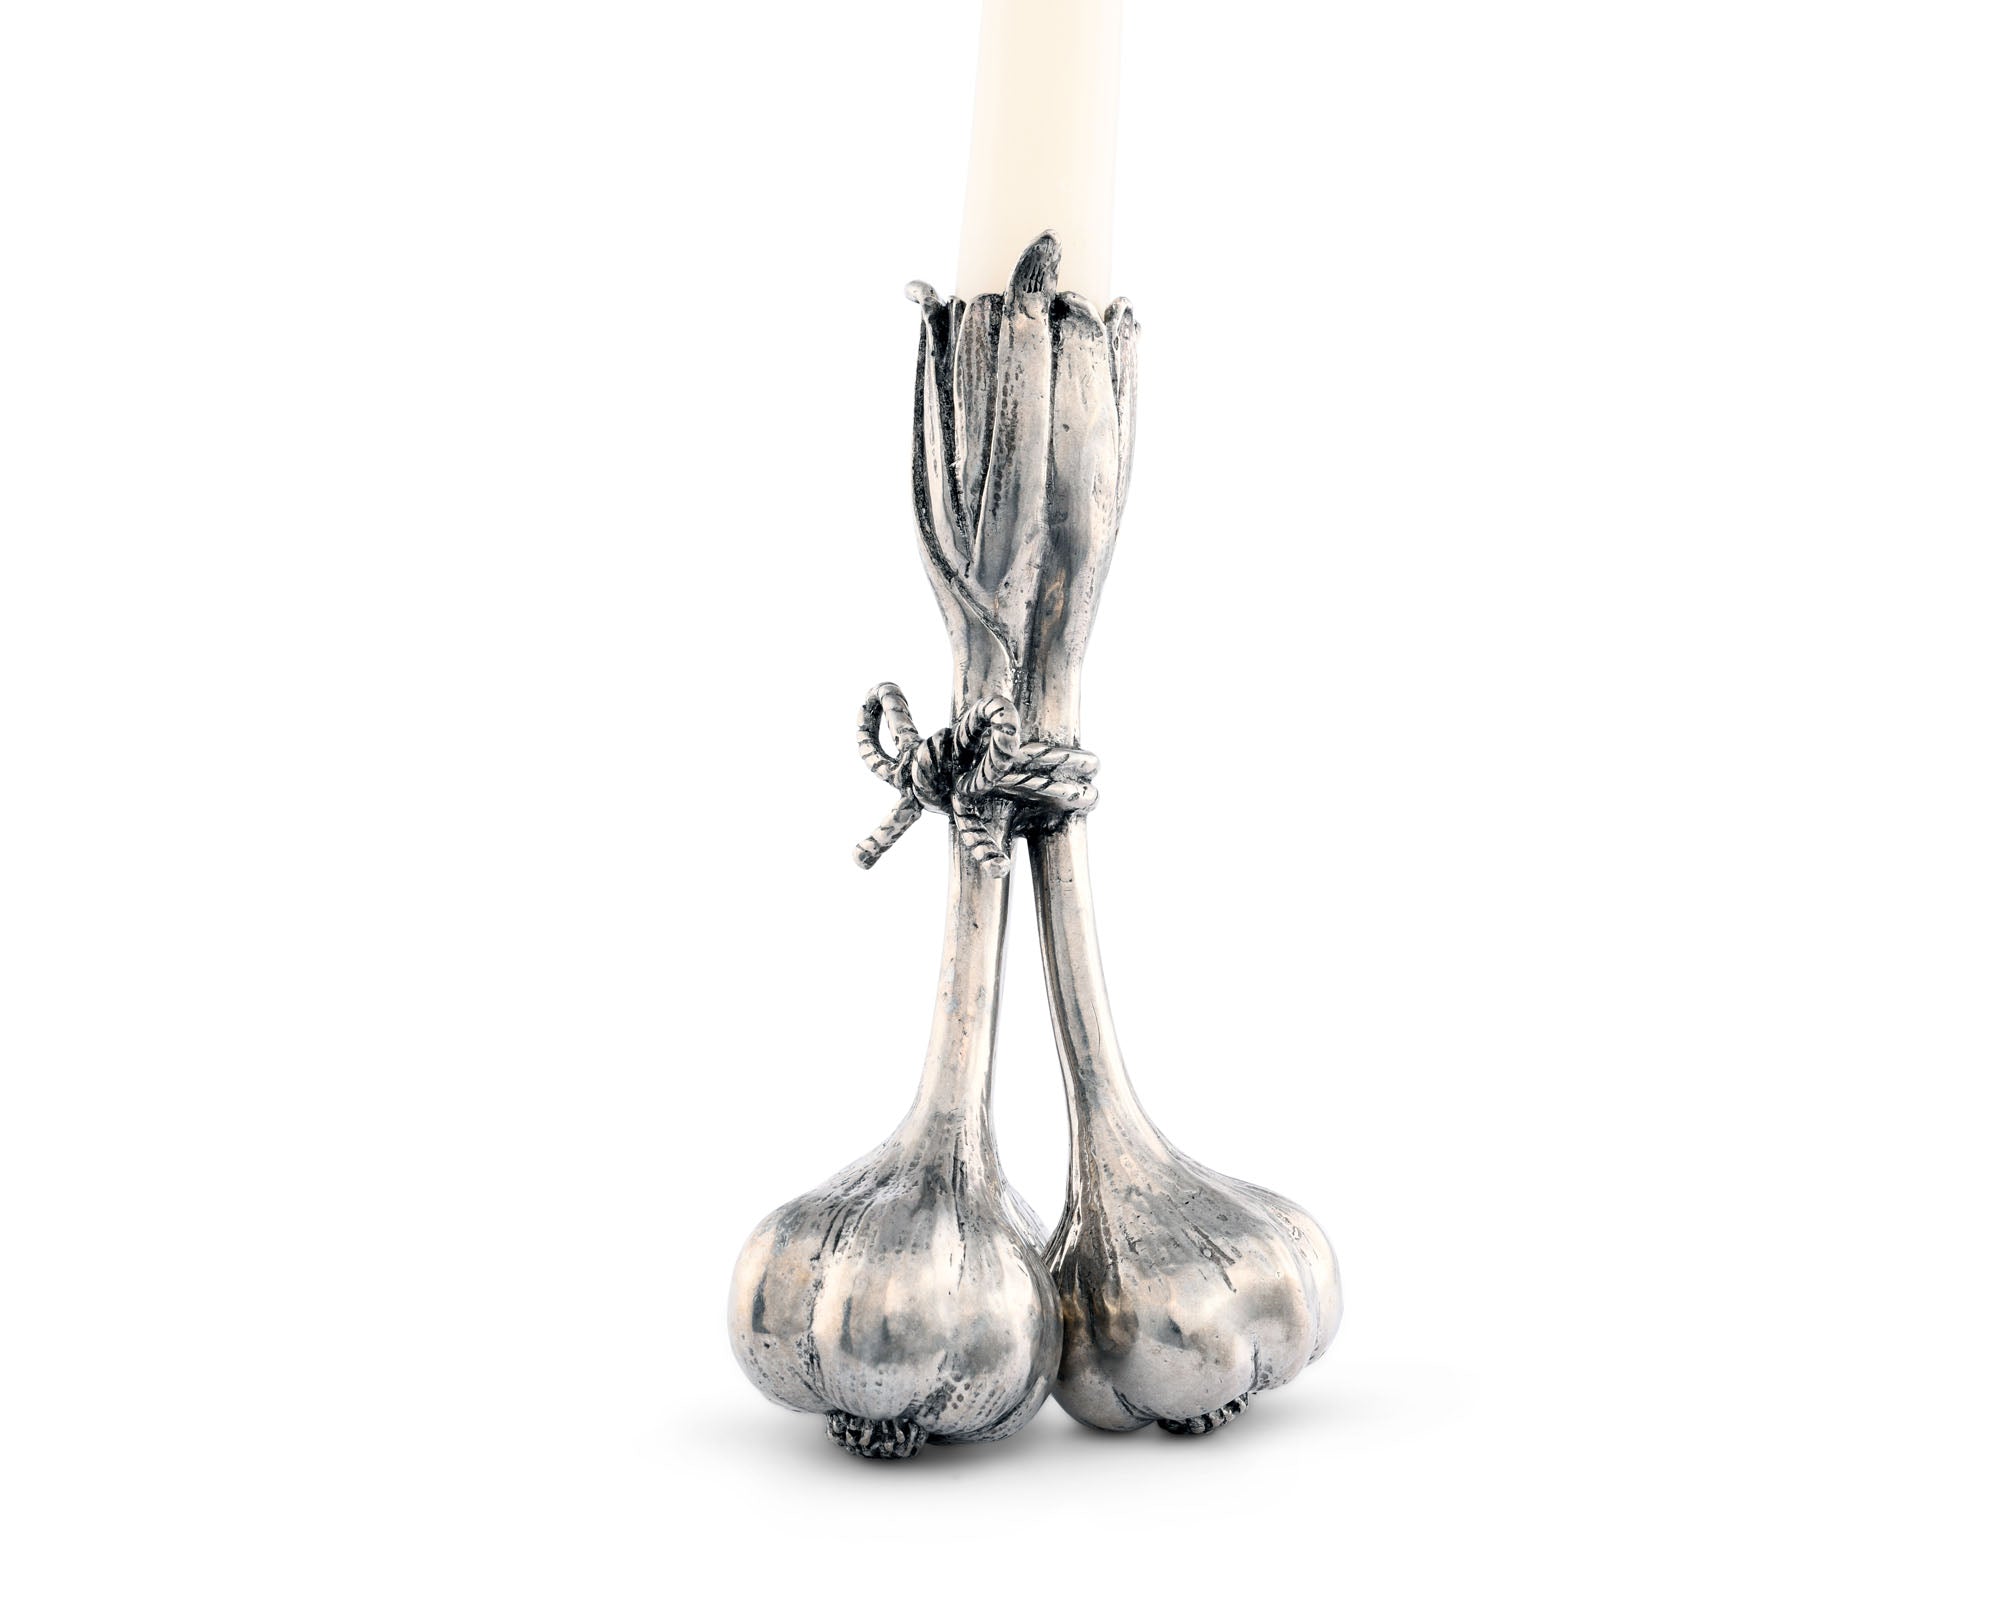 Vagabond House Garlic Candlestick Product Image